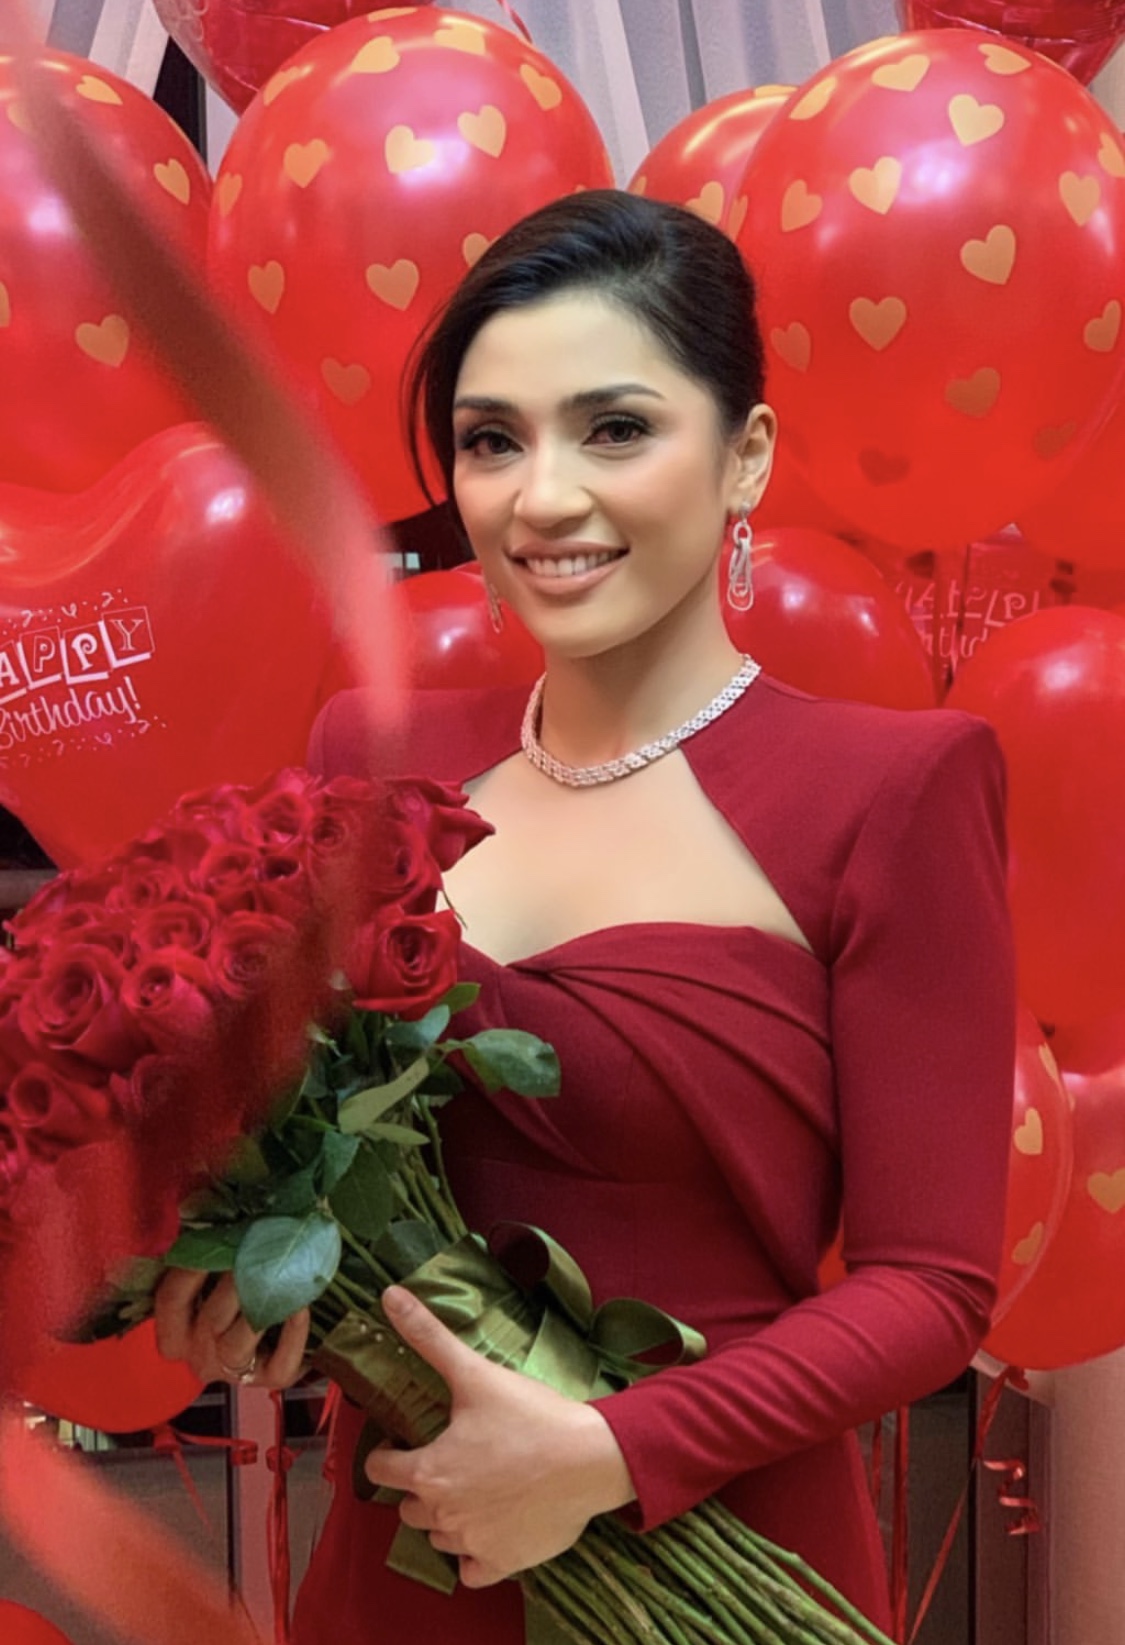 Rizman Nordin Buat Kejutan Hari Jadi Buat Isteri, Hadiahkan Sejambak Bunga Ros &#038; Puluhan Belon Merah!